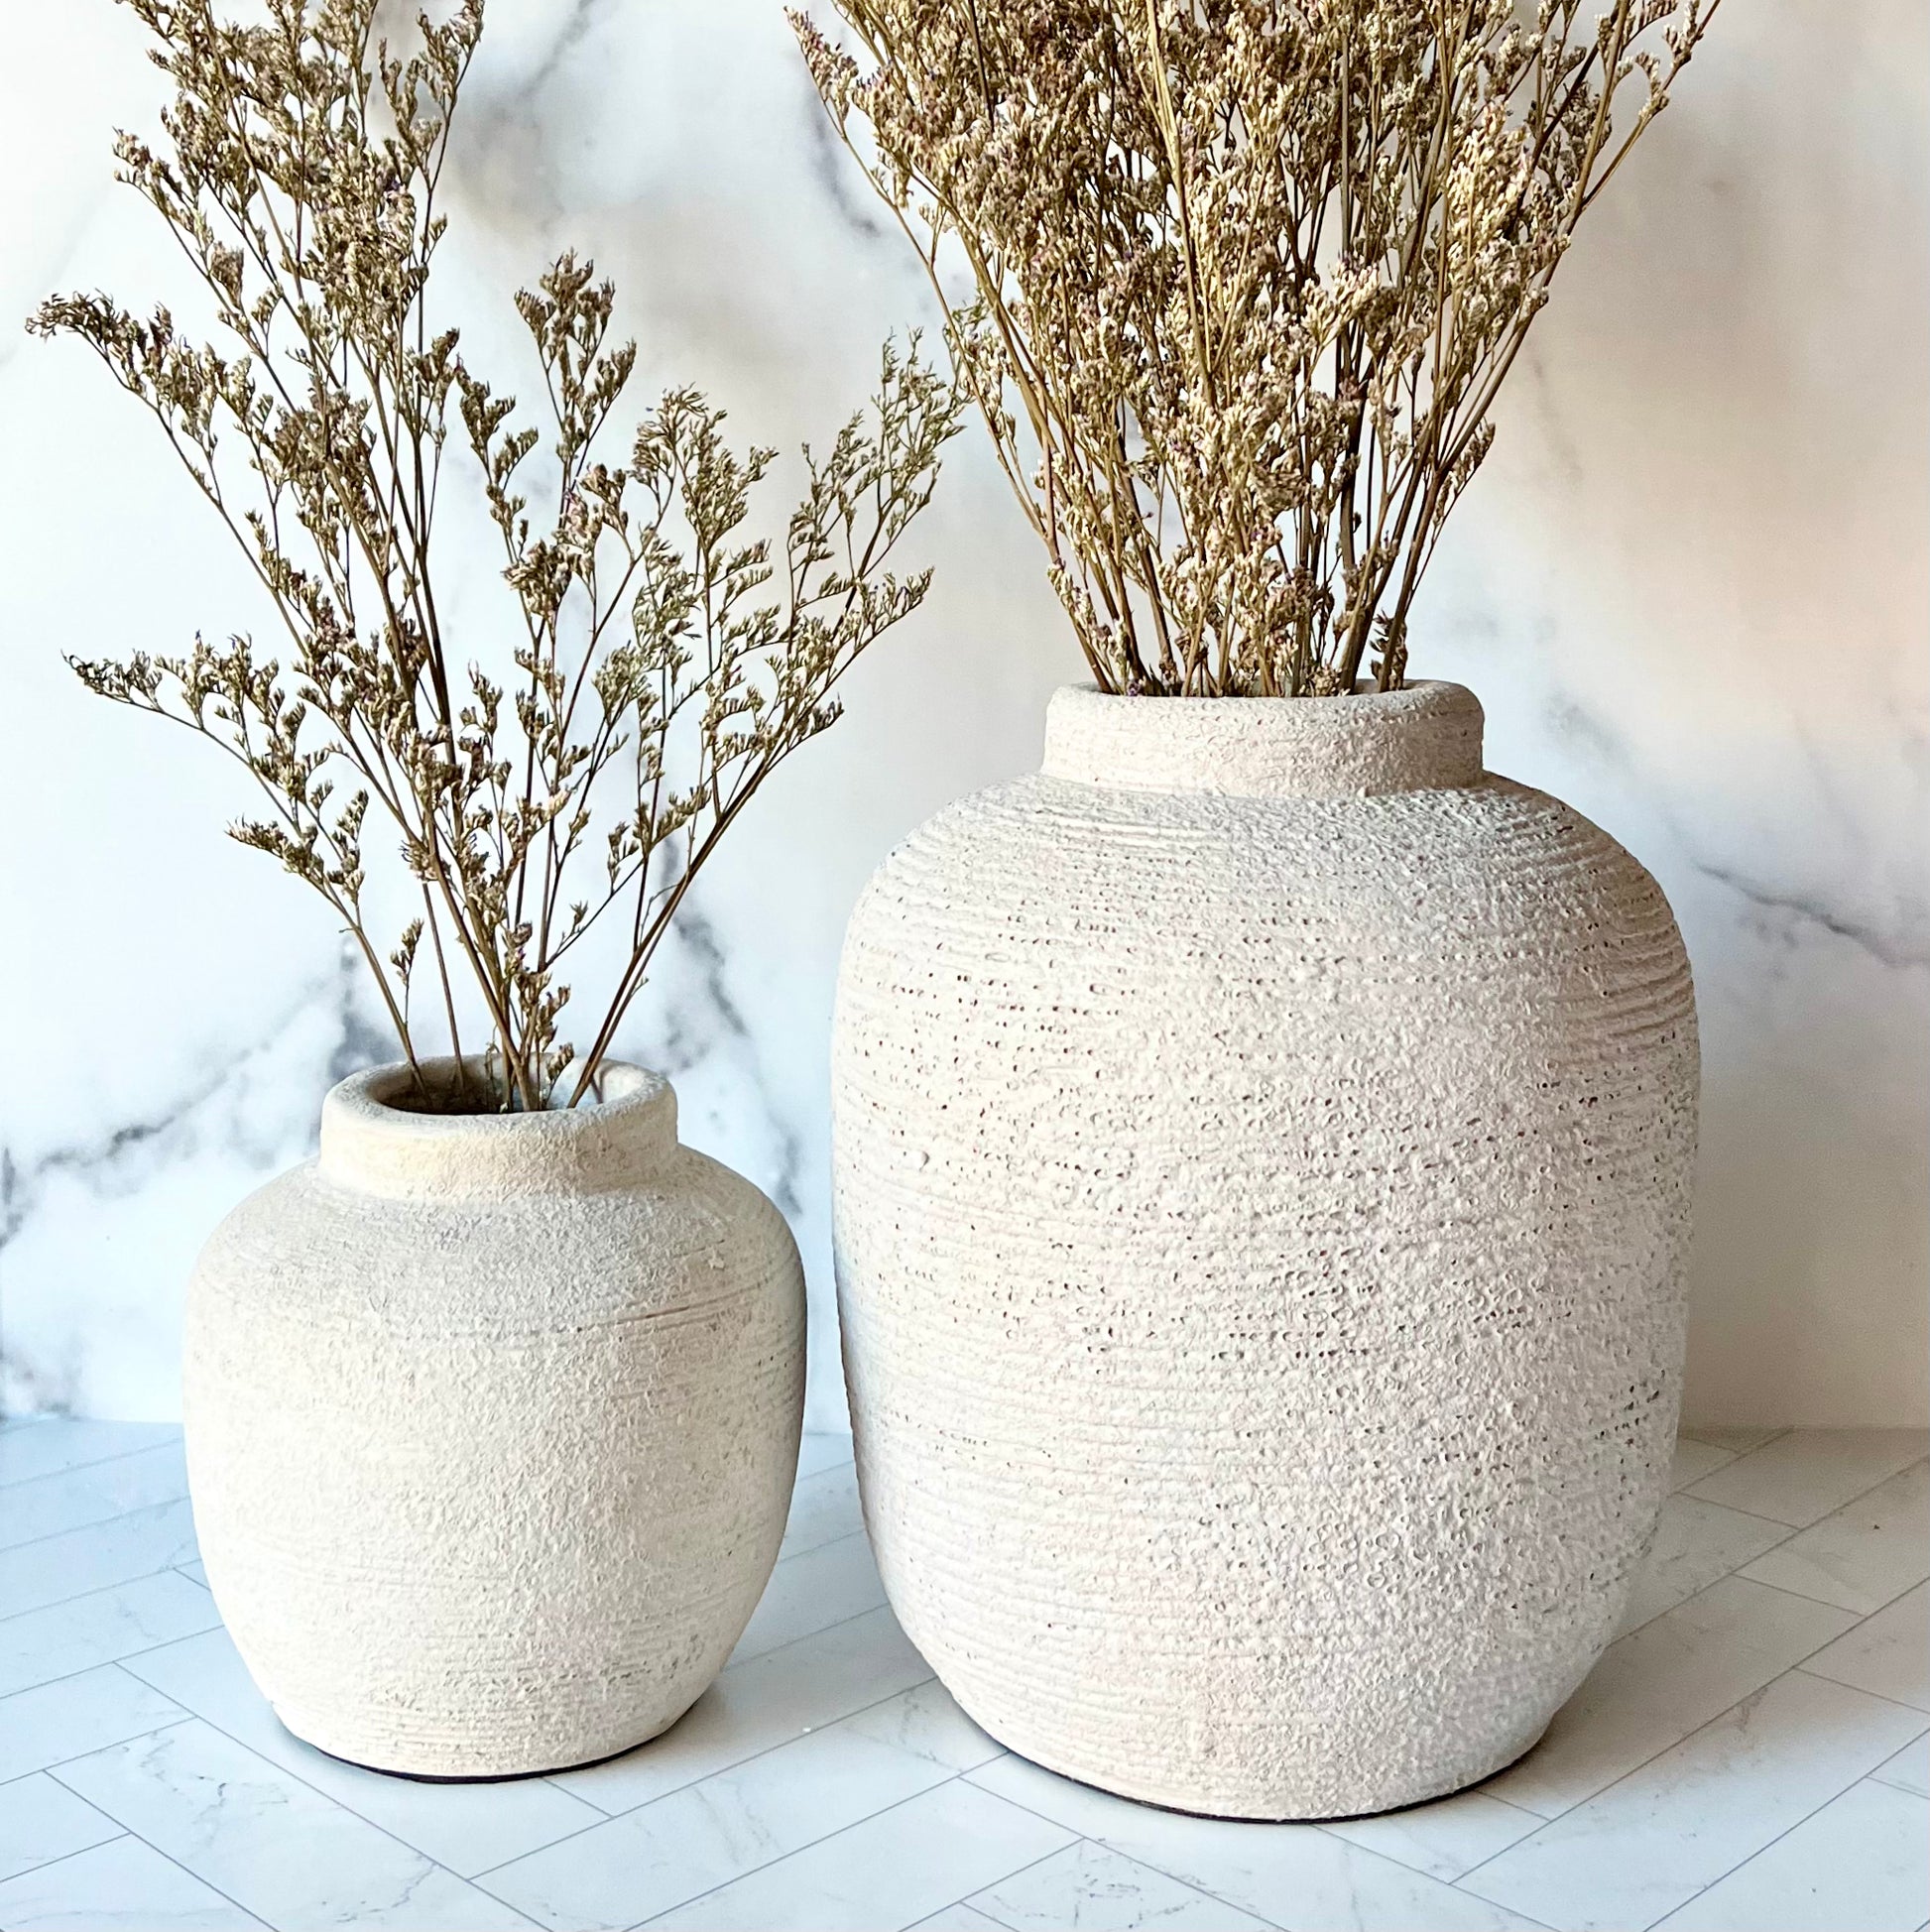 The Petite Concrete Vase next to a larger gray vase to show its size comparison